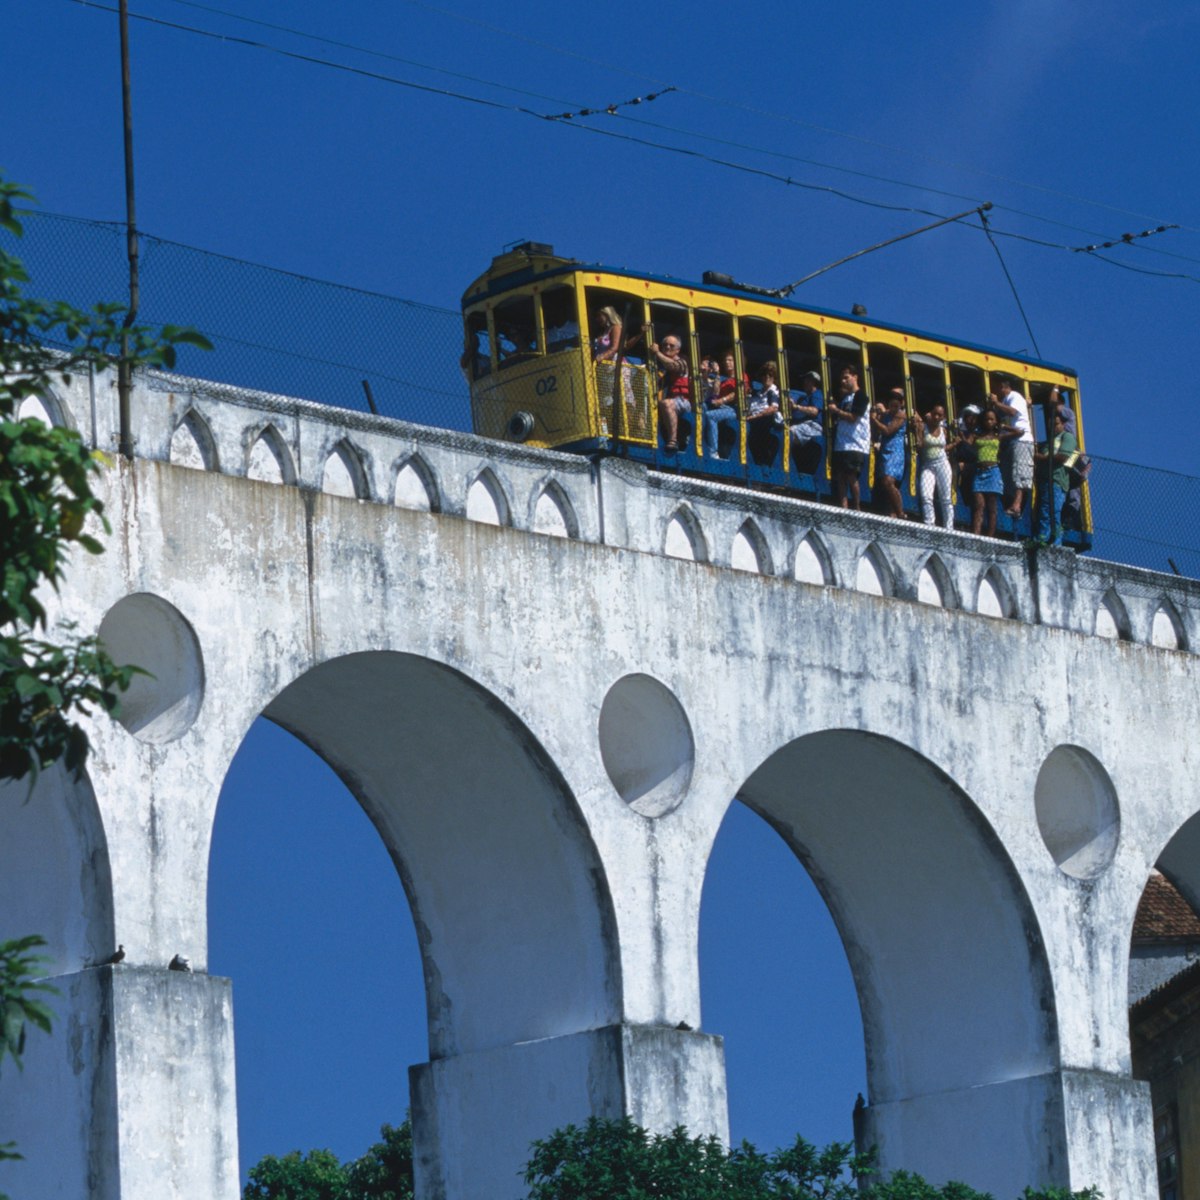 Bondinho (tram) on Lapa Arches, Lapa.